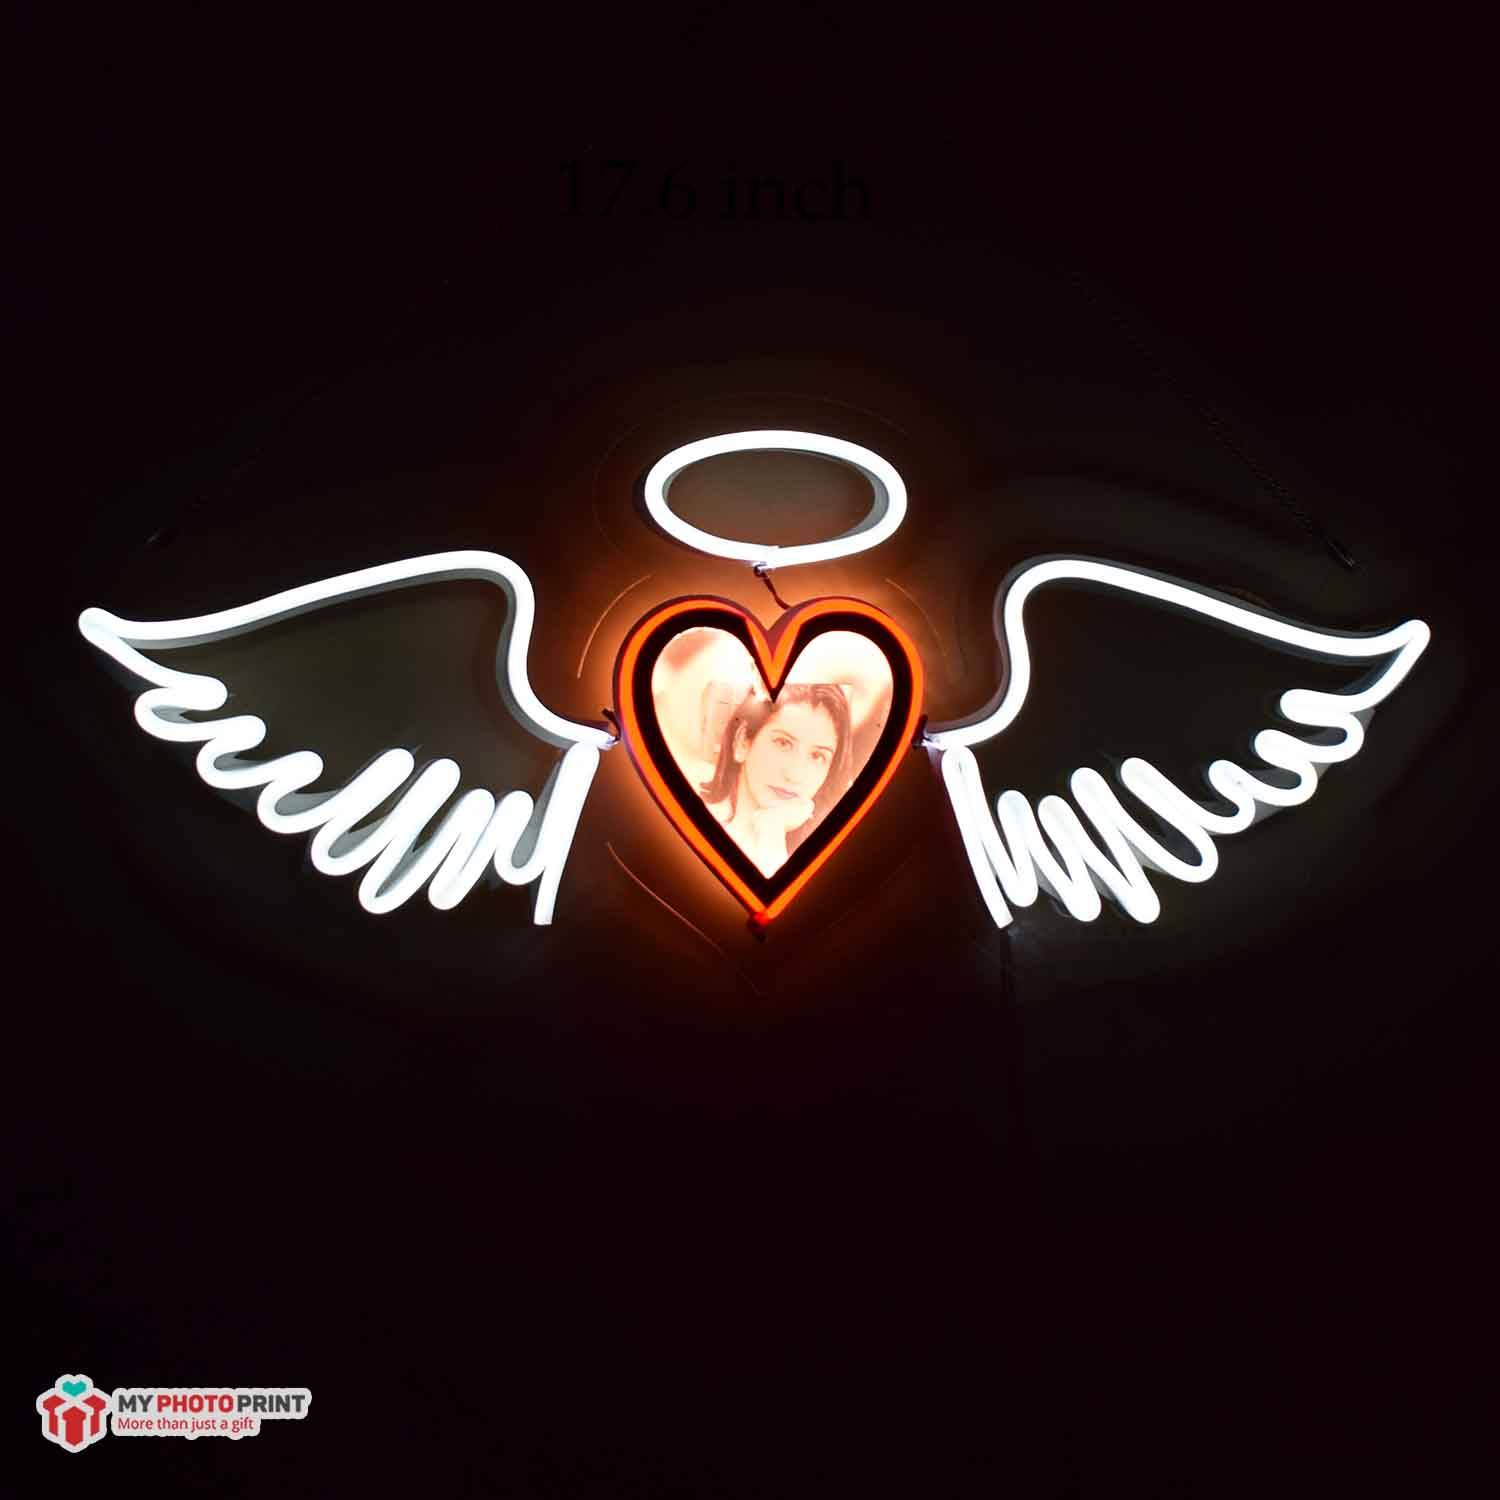 Customized Neon Heart Photo Angel Wings Photo Led Neon Sign Decorative Lights Wall Decor